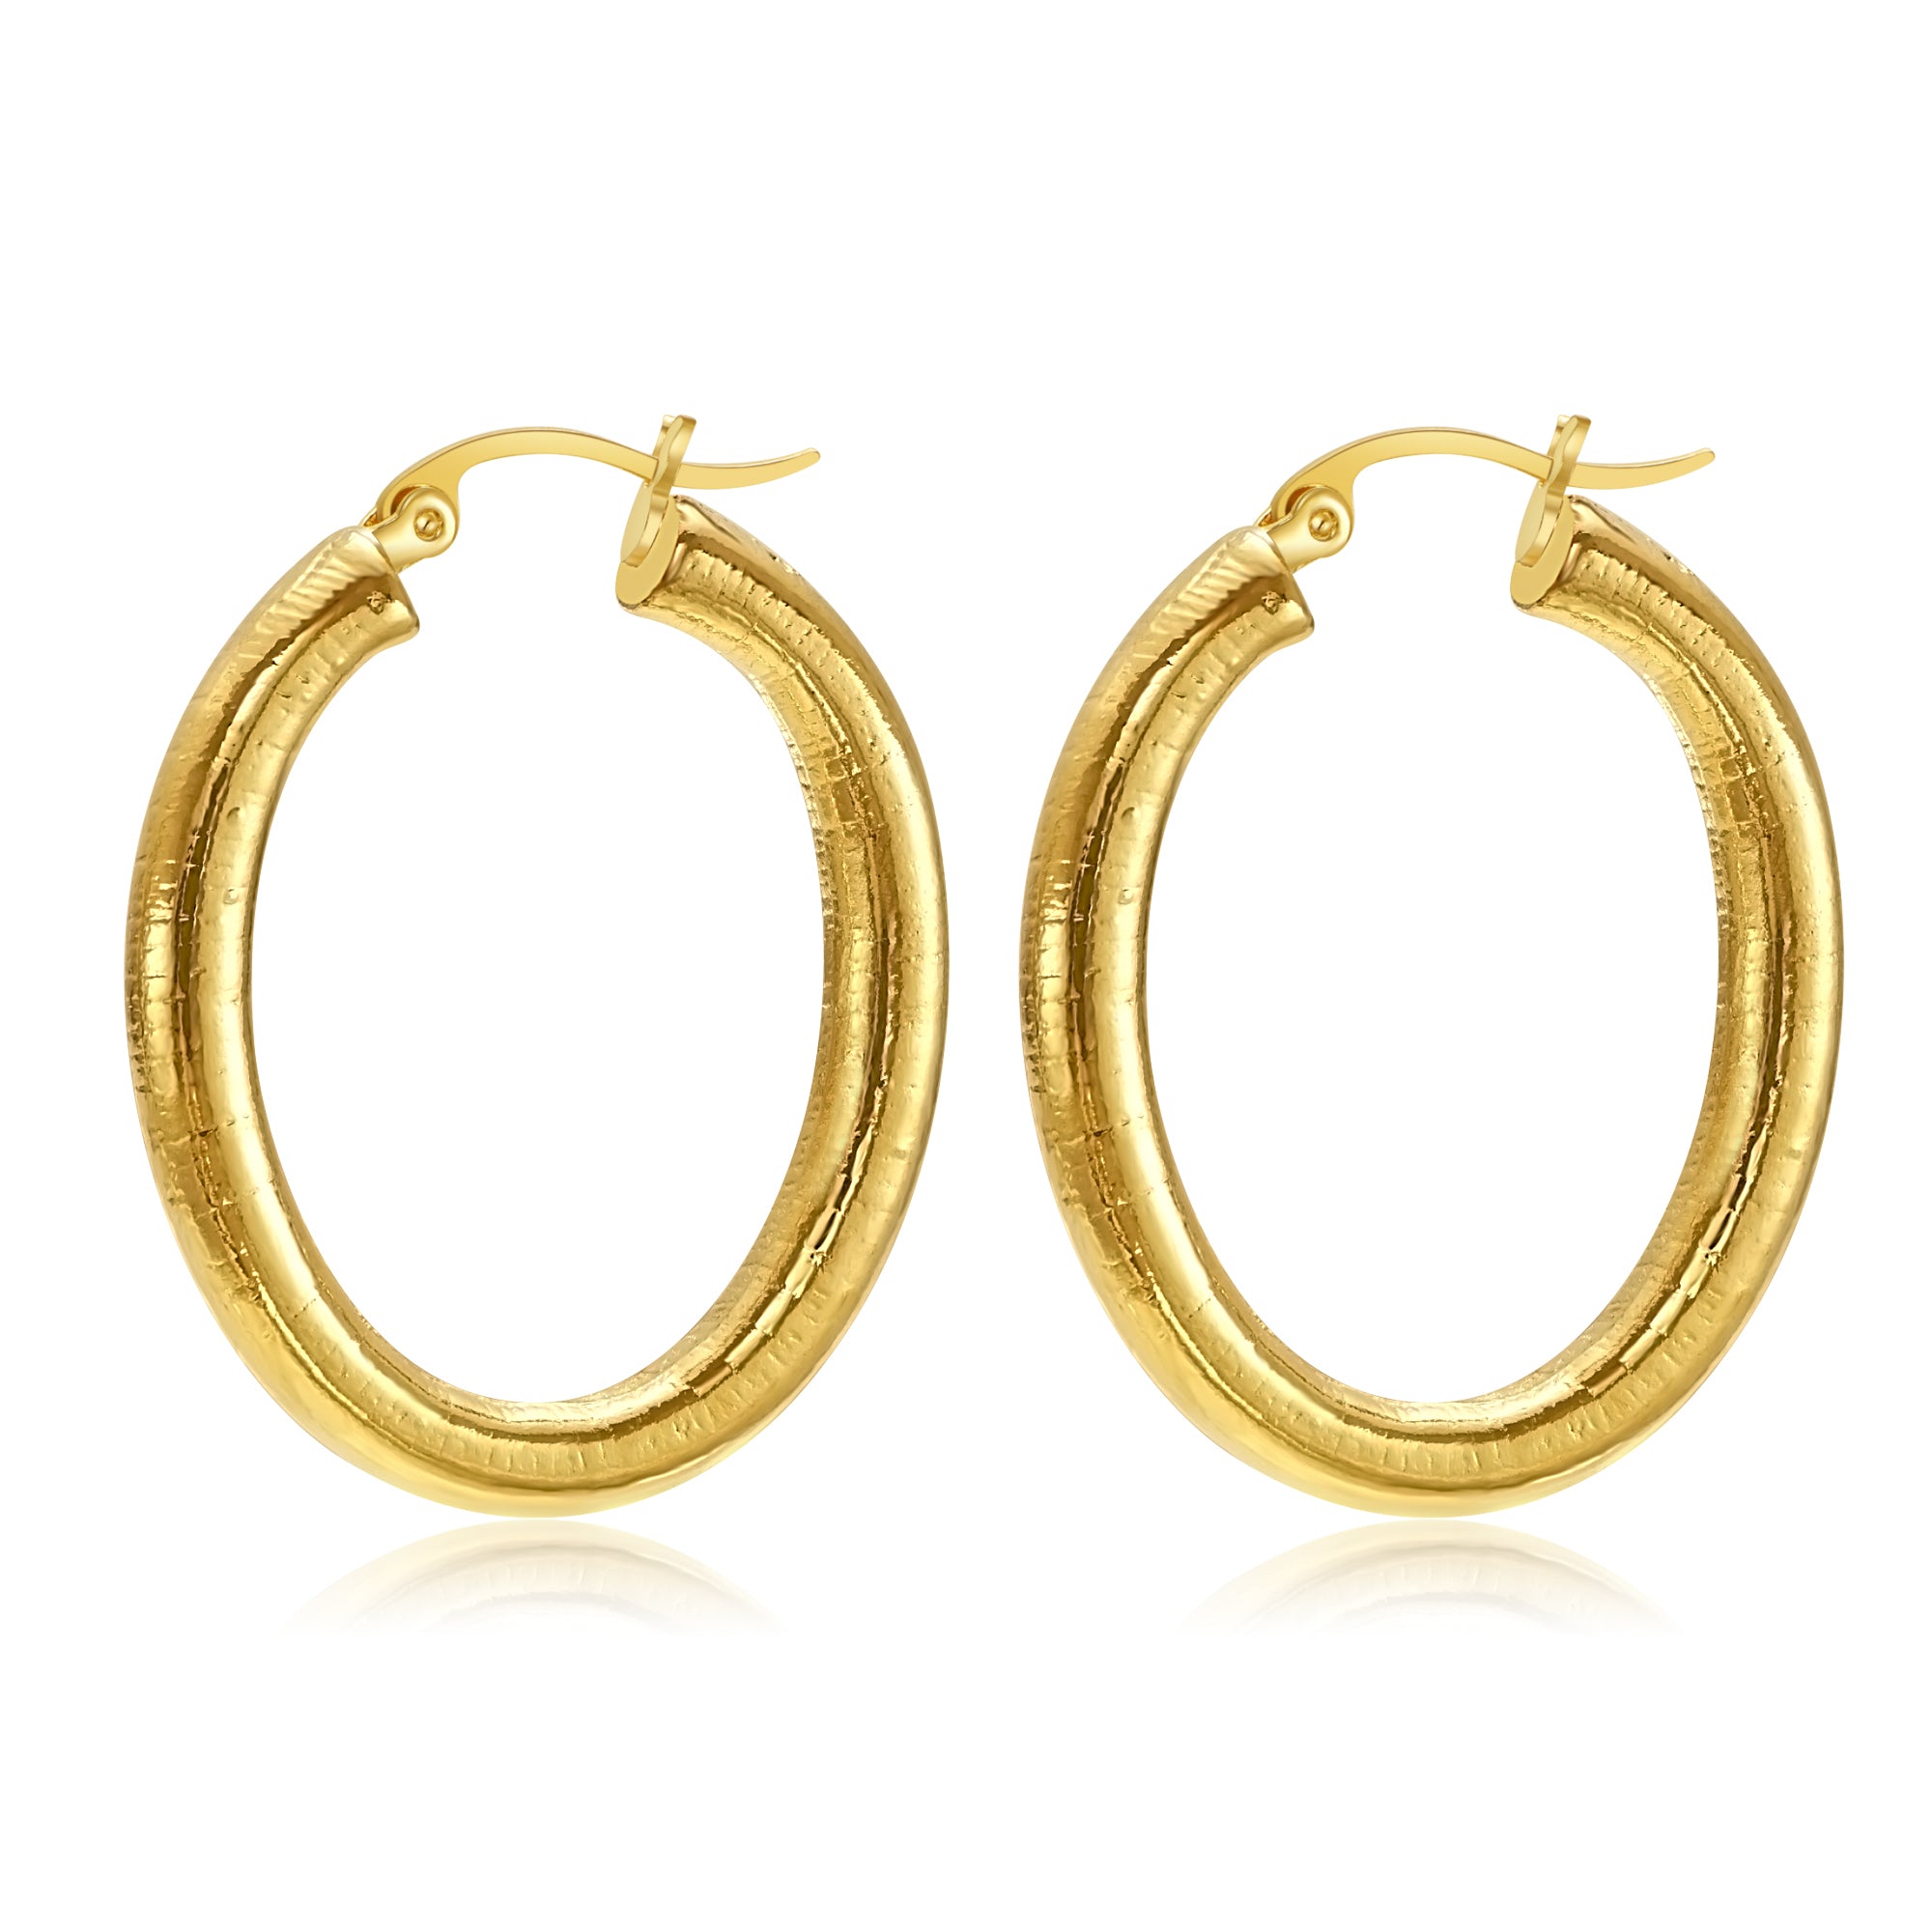 Matte gold hoop earrings